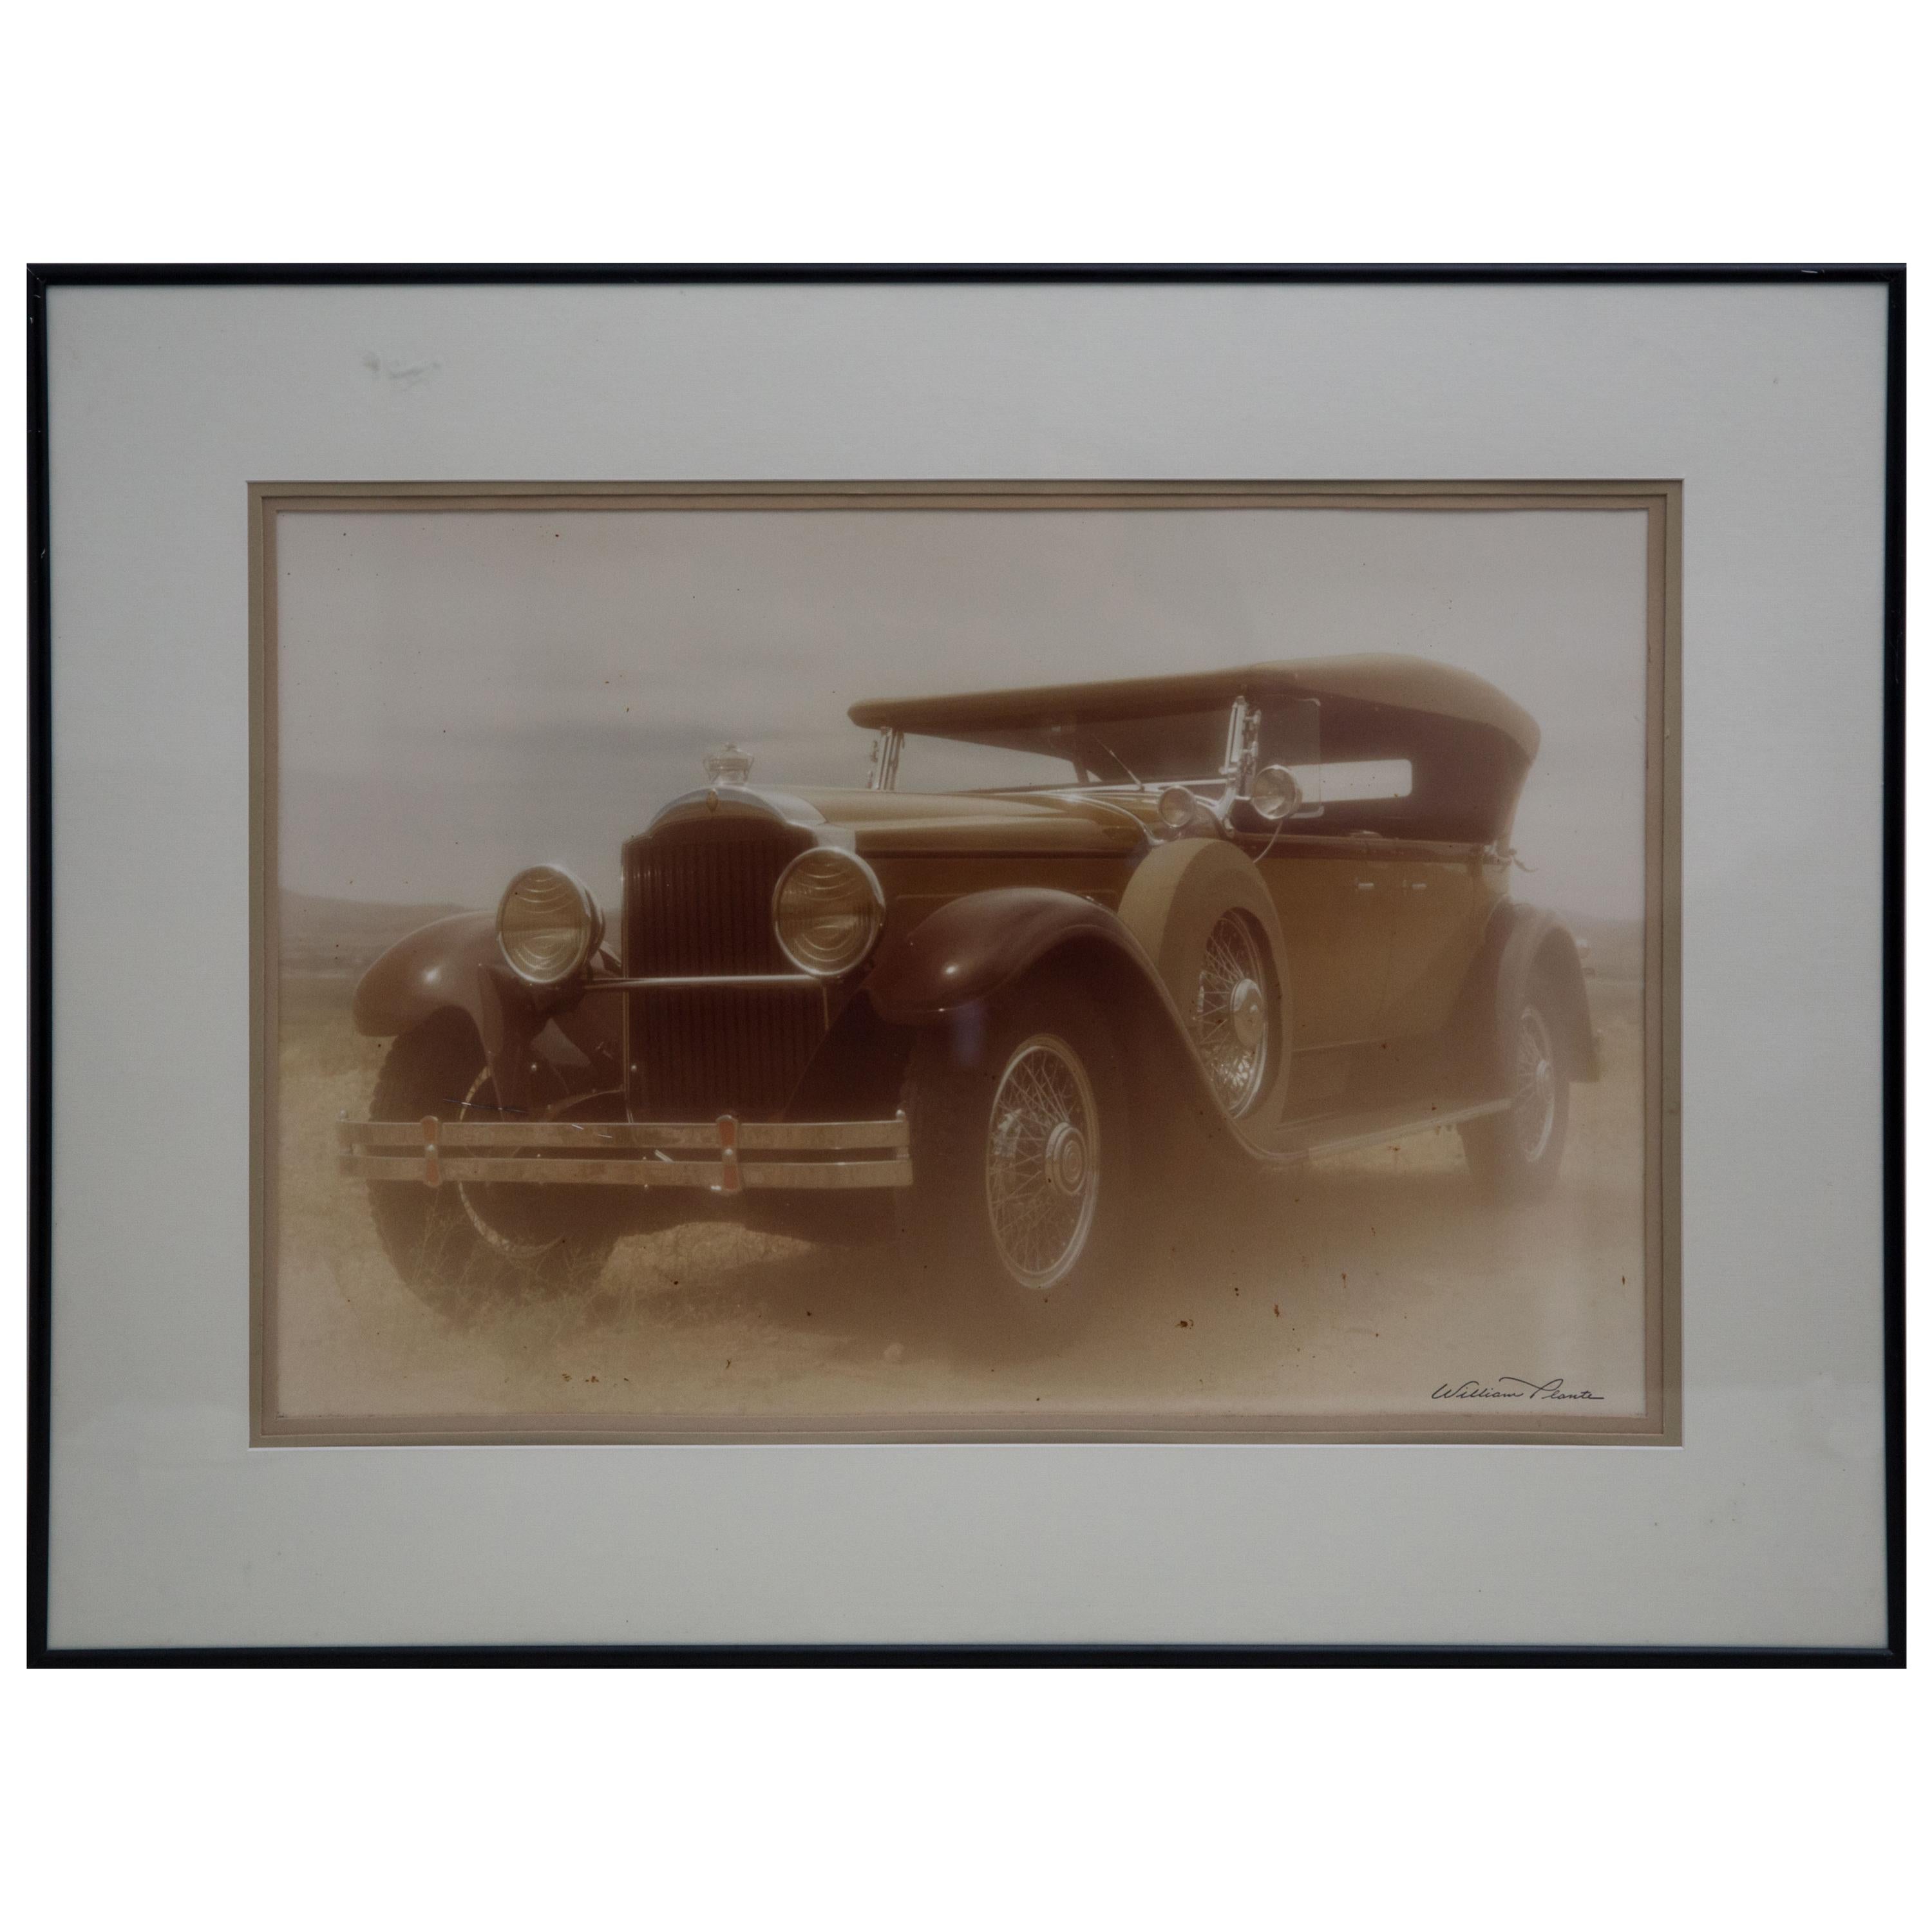 William Plante Signed Vintage lg. Golio Automobile Photo of 1929 Packard Phaeton